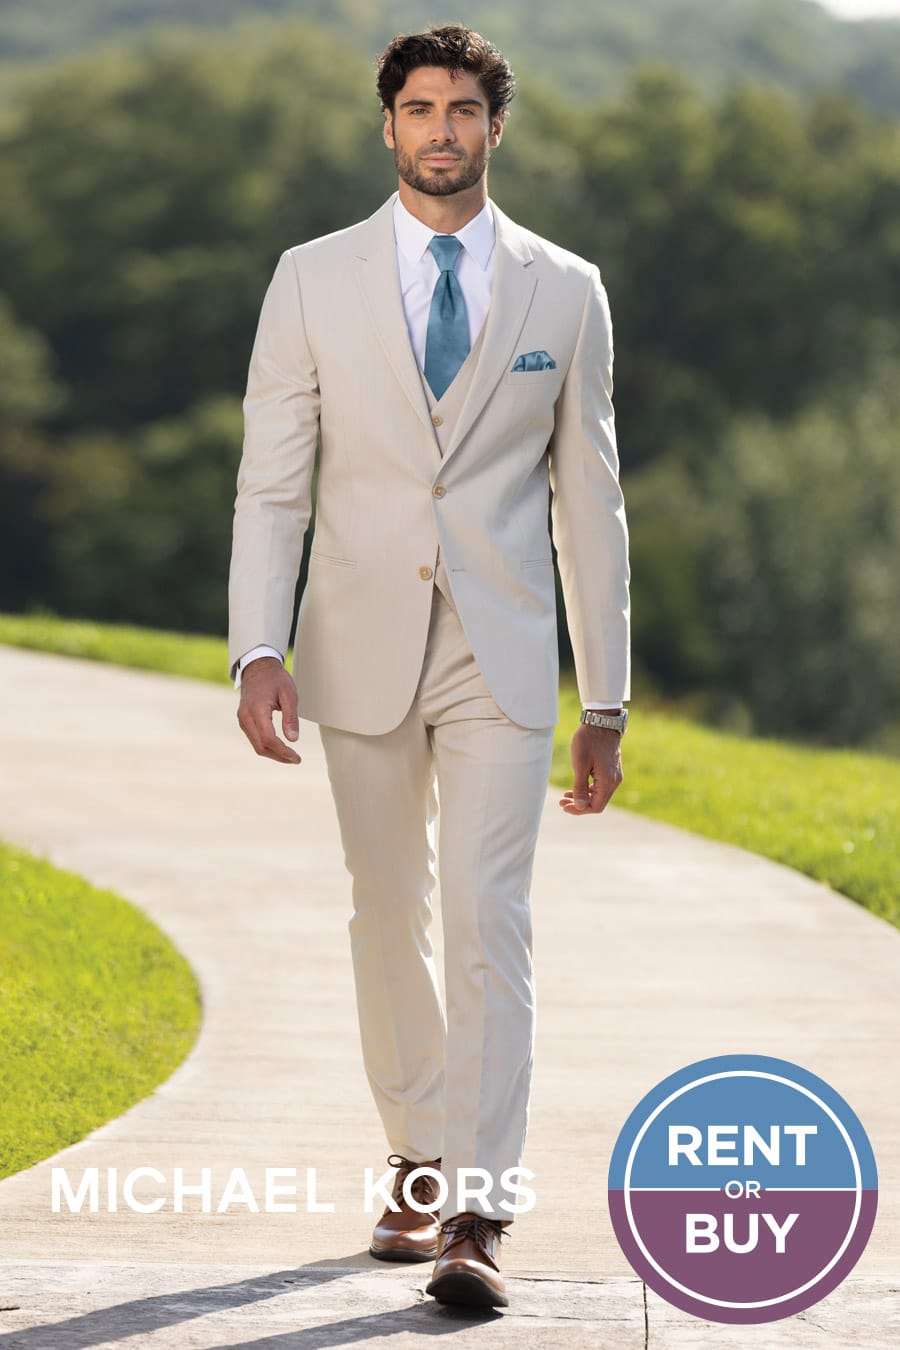 Michael Kors Tan Performance Wedding Suit Rent or Buy for your wedding